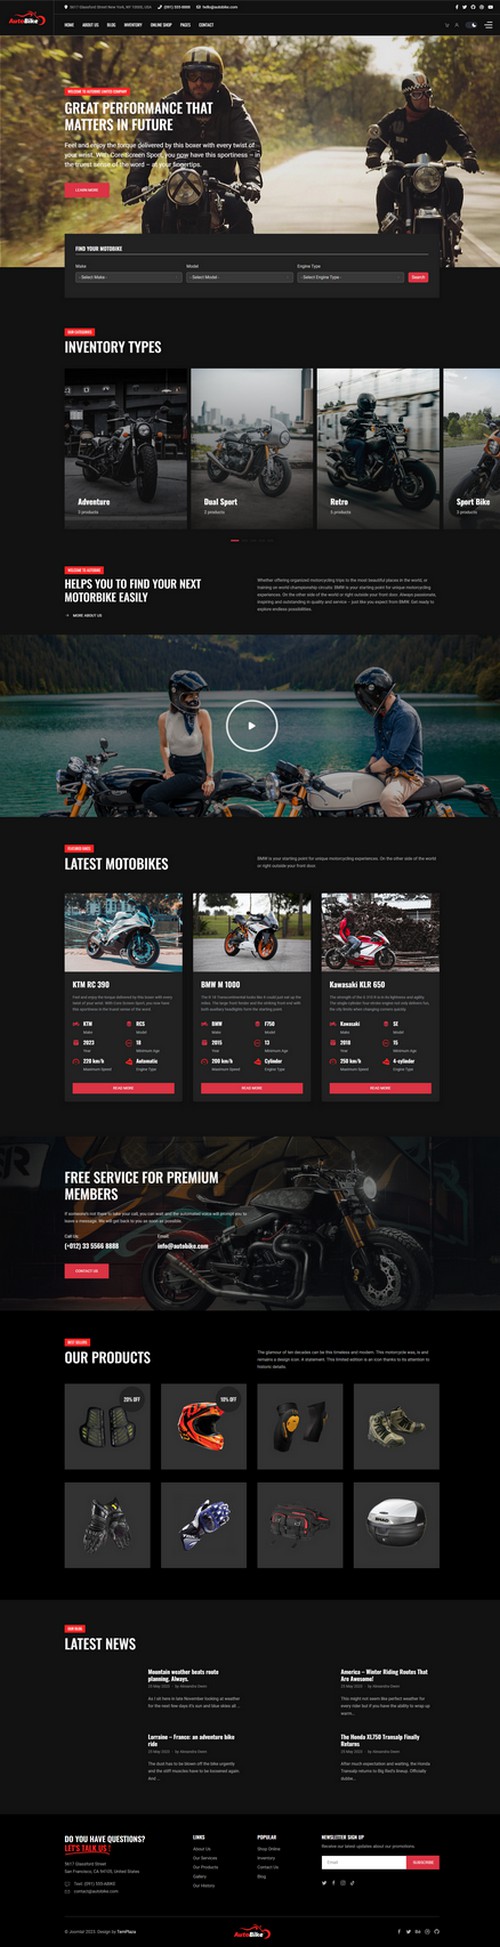 Autobike - Motorcycle Store & Bike Rental Services Joomla 4 Template